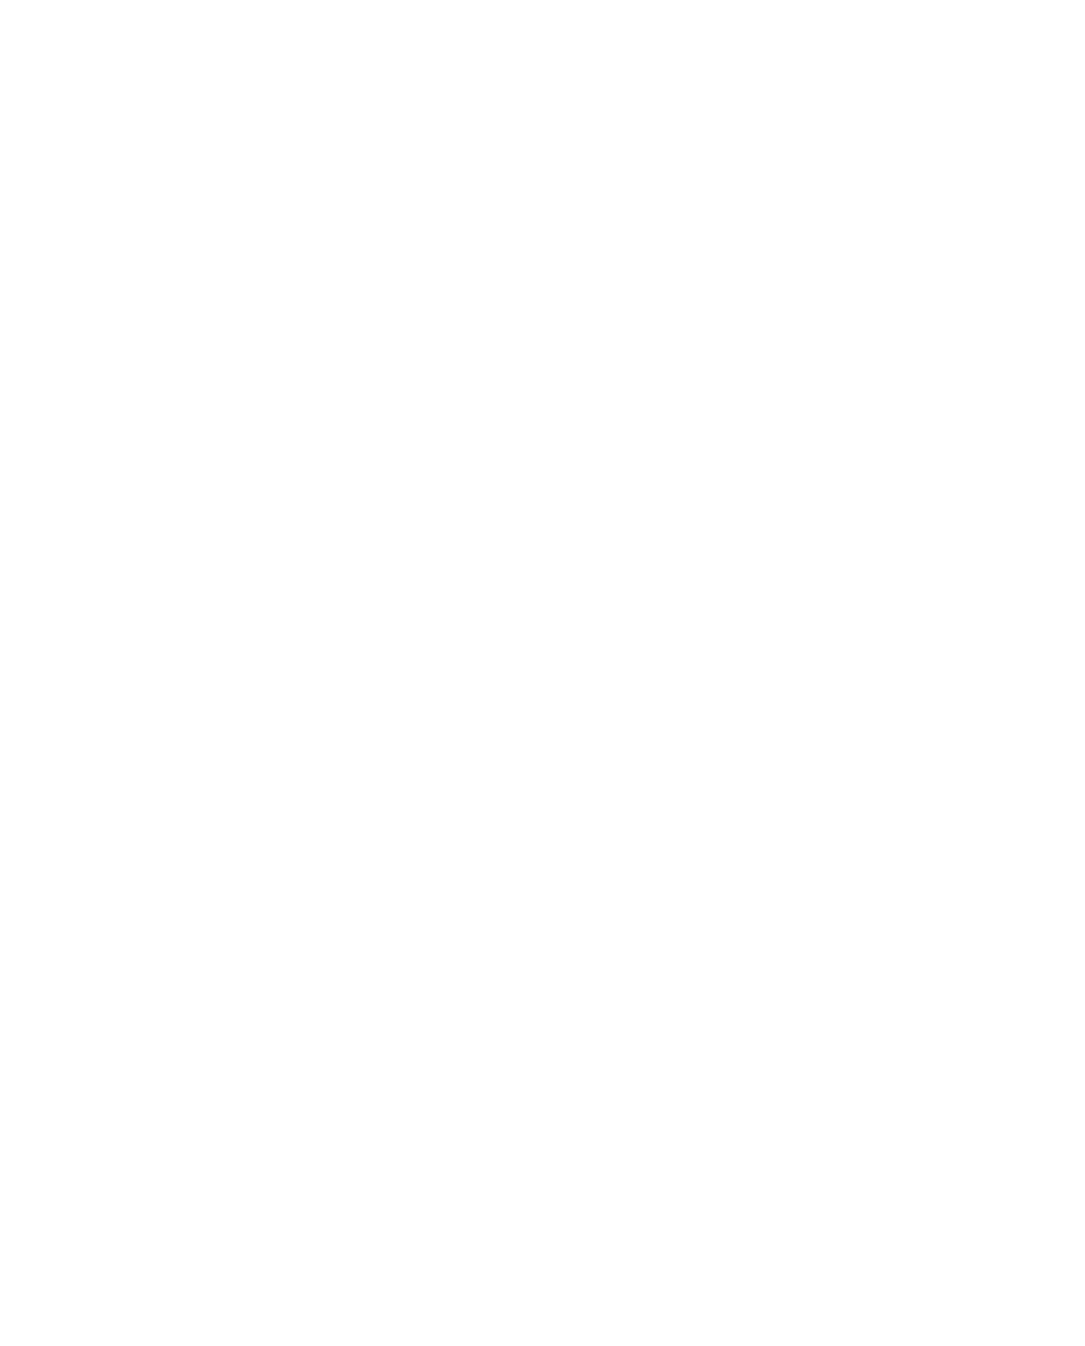 PSP Entertainment